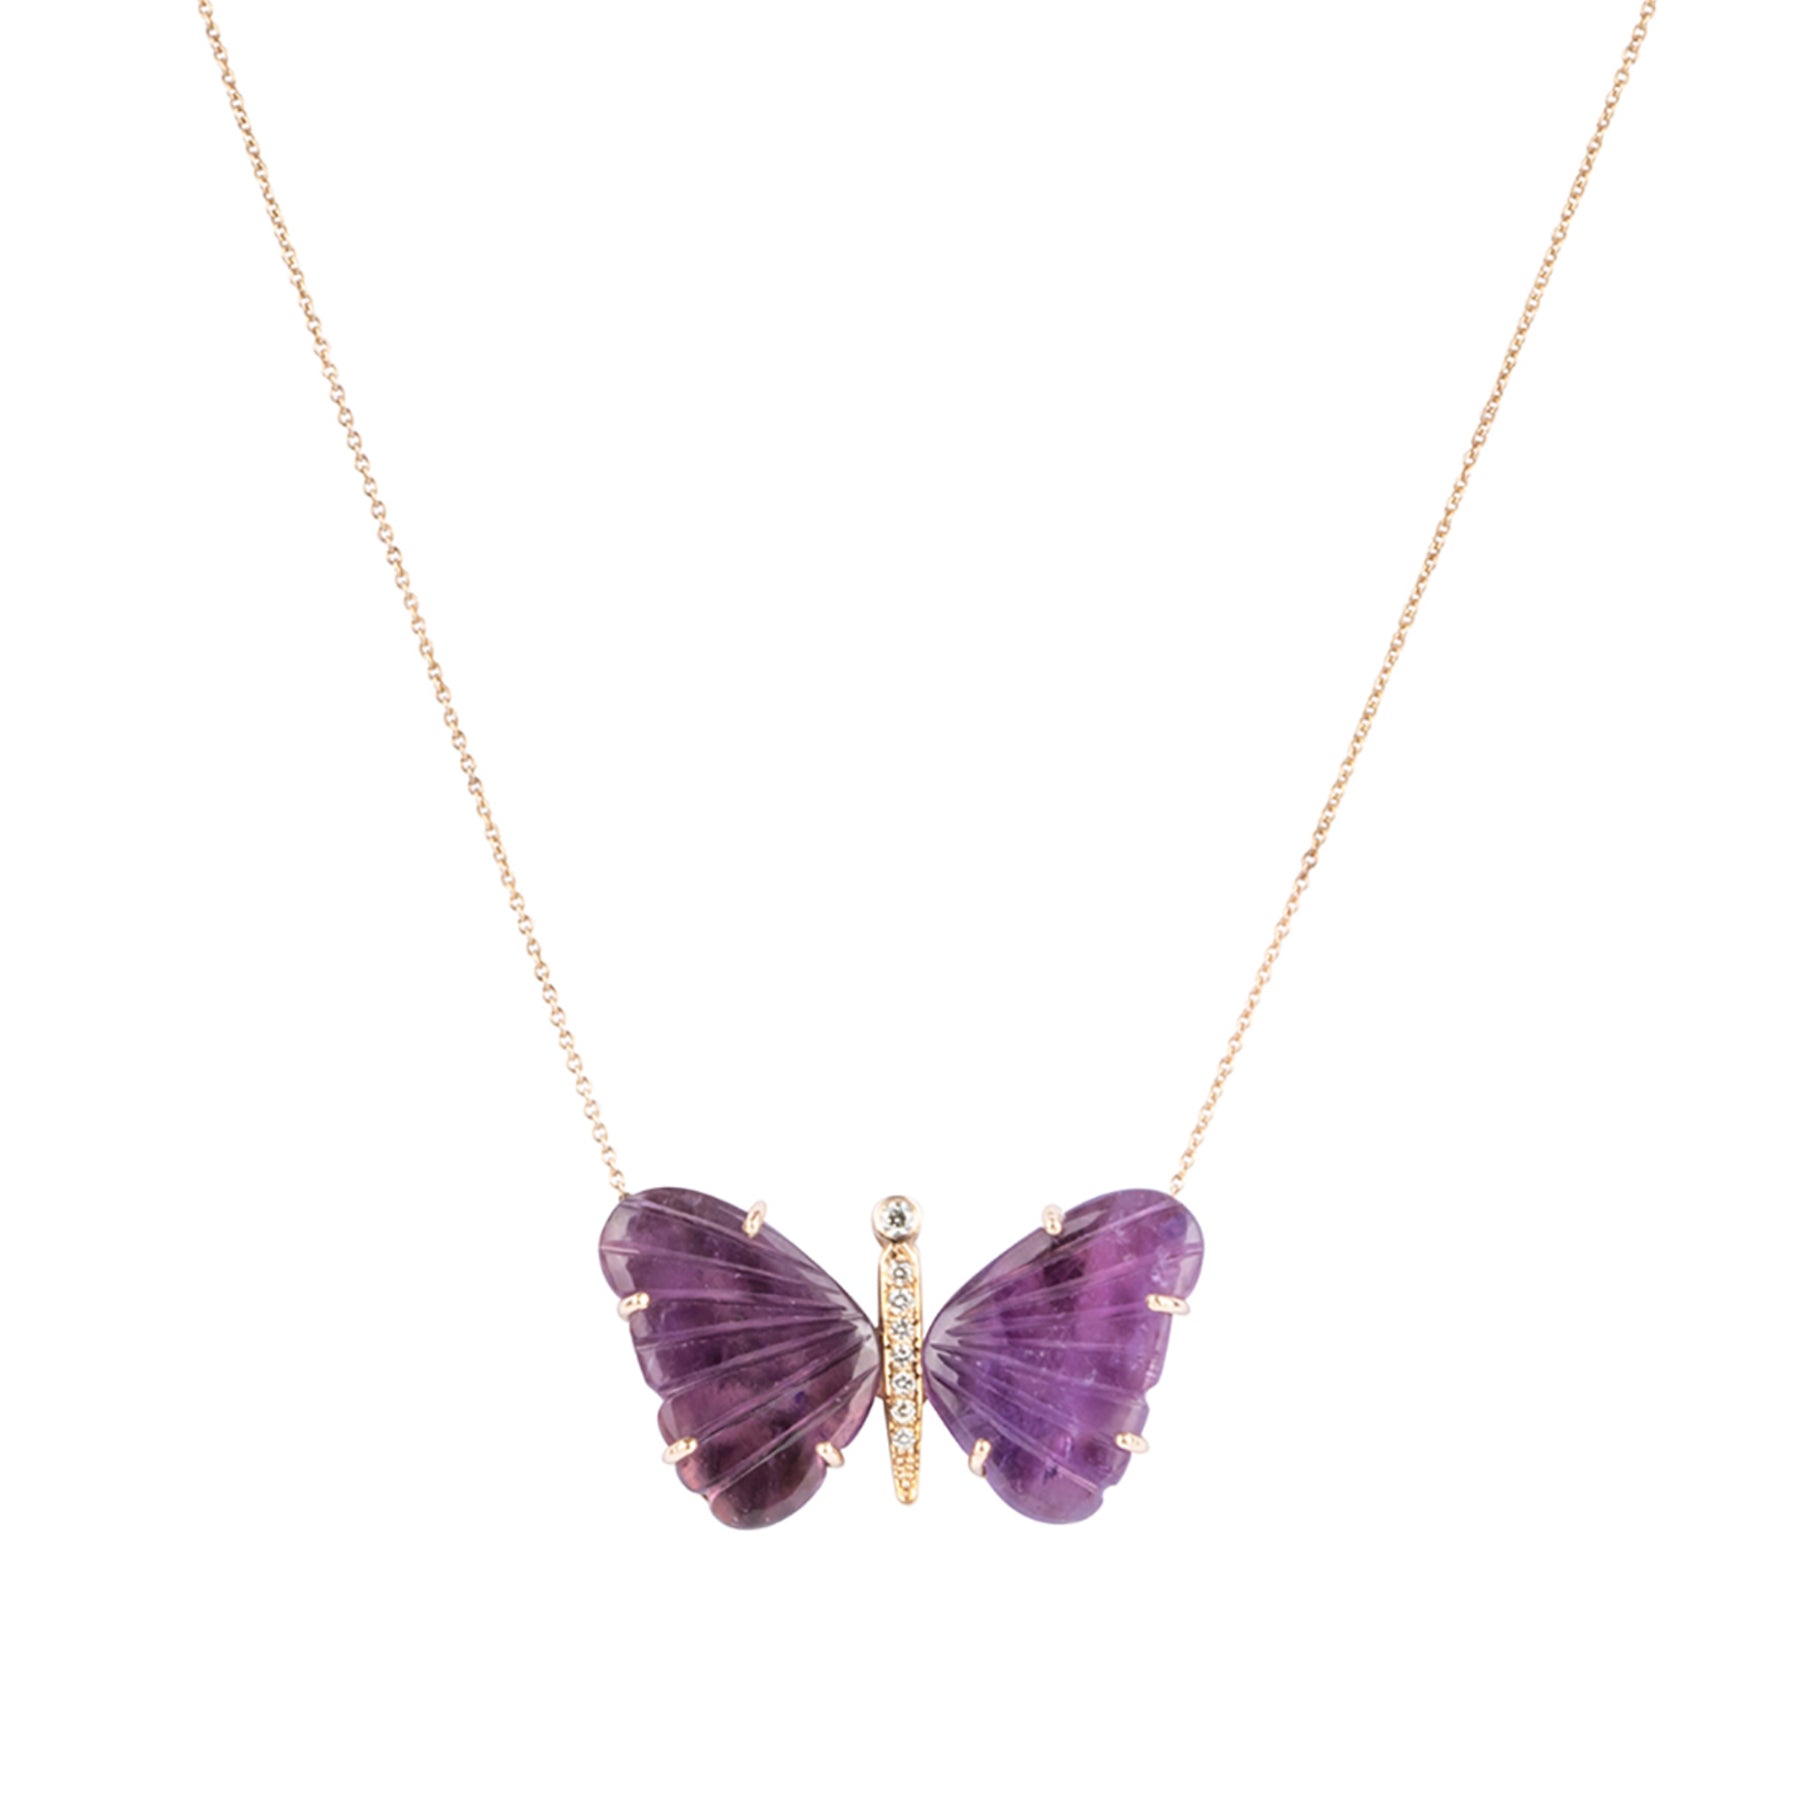 Medium Amethyst Butterfly Necklace - Nina Segal Jewelry